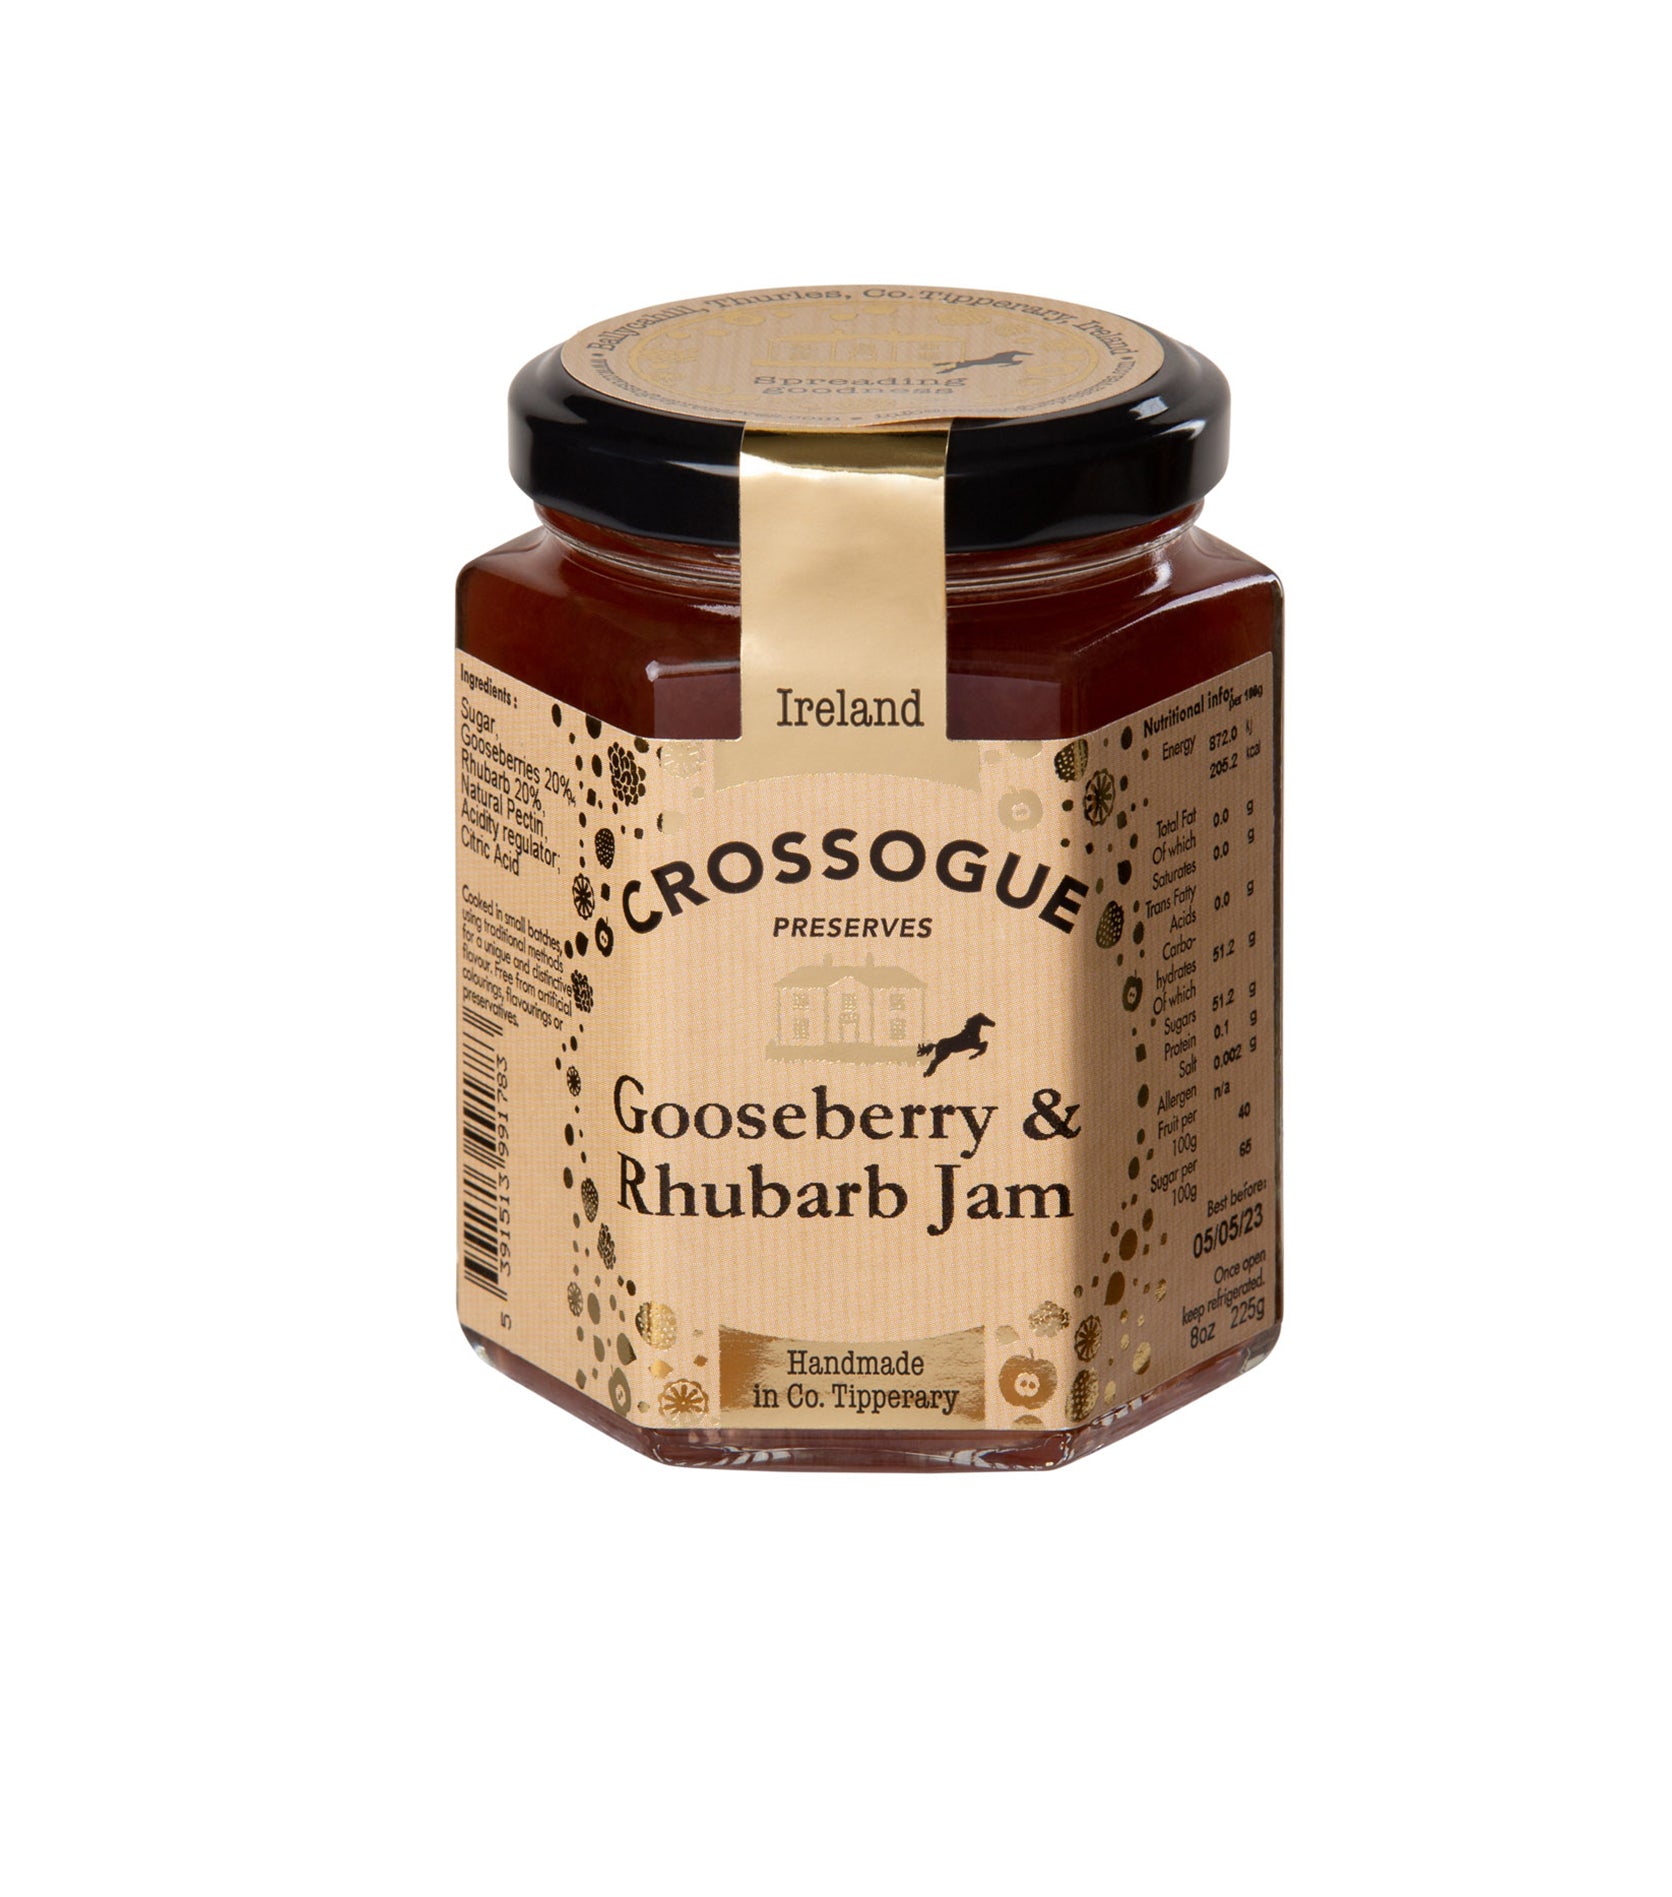 Gooseberry & Rhubarb Jam